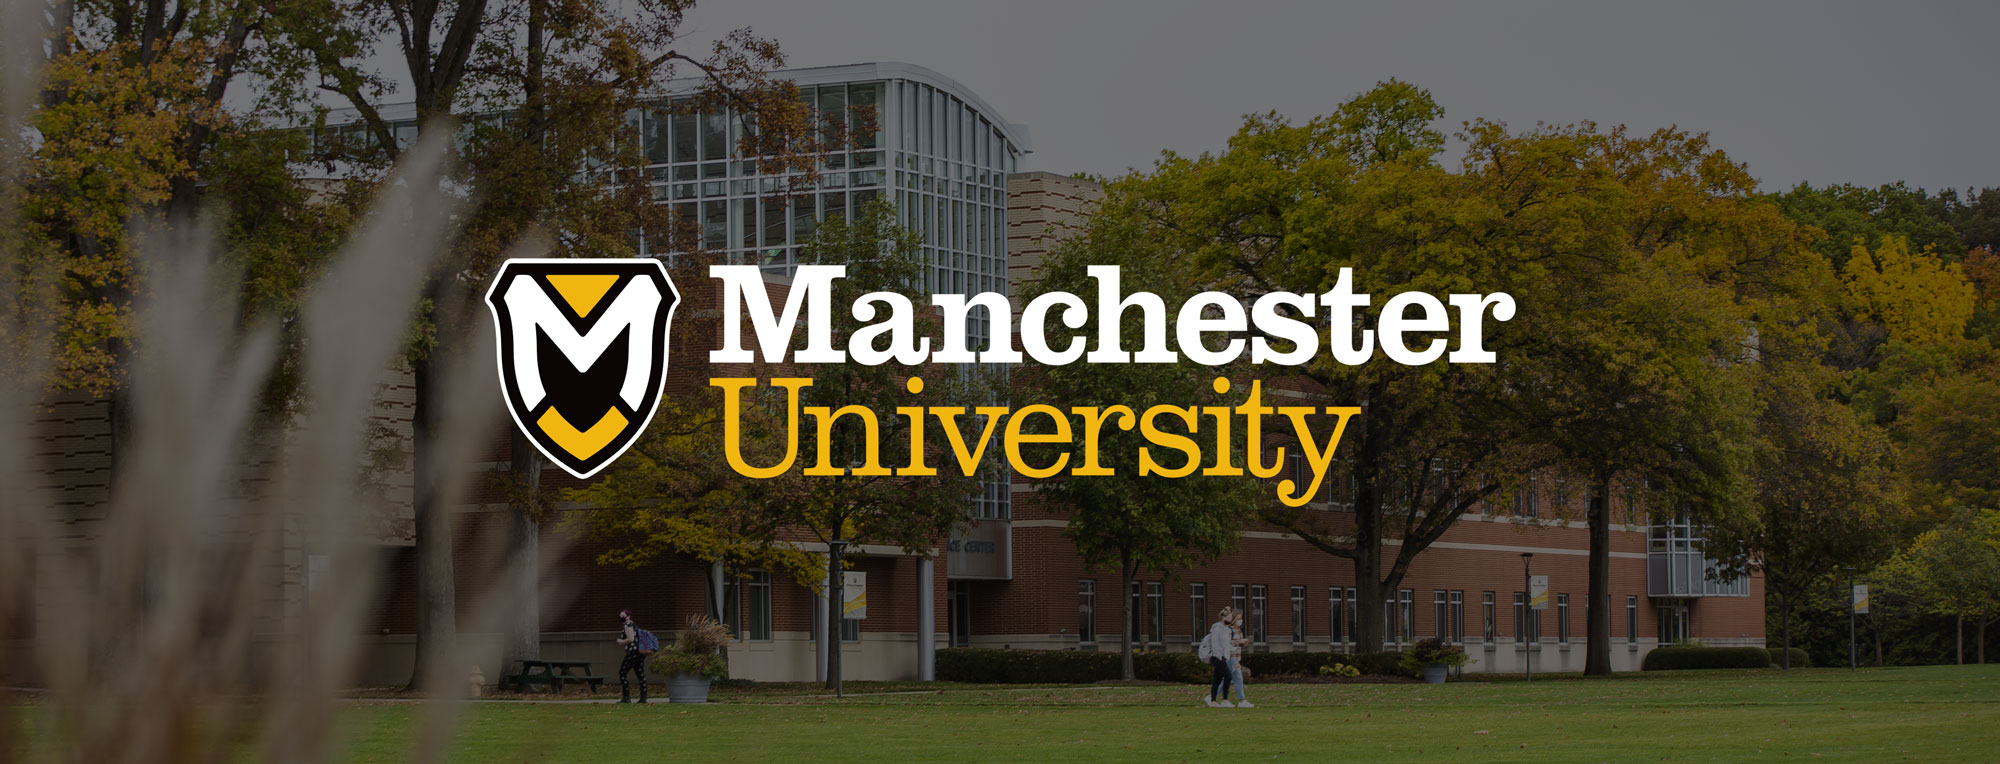 Manchester University eSports Ad